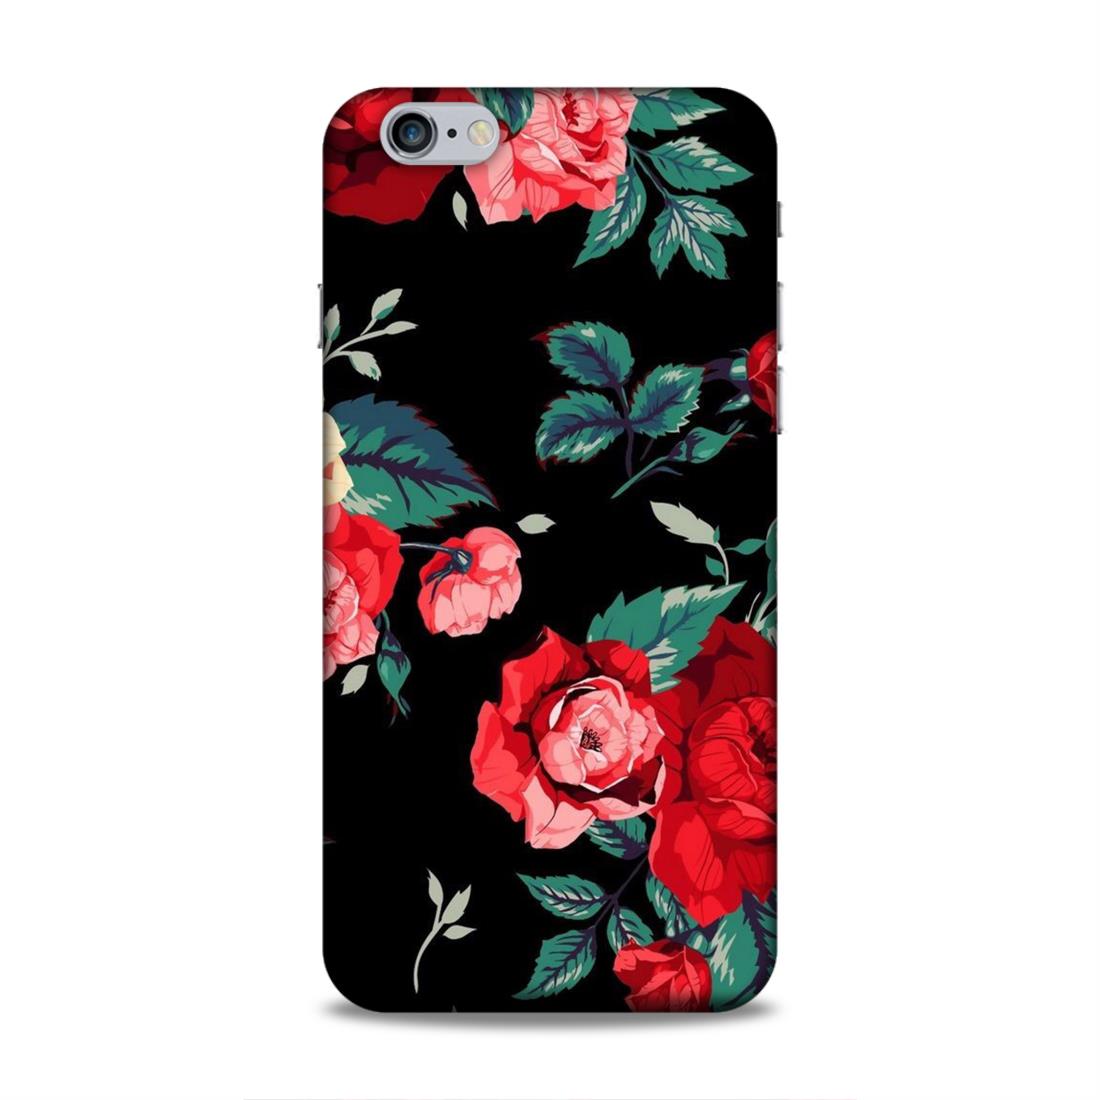 Flower Hard Back Case For Apple iPhone 6 Plus / 6s Plus